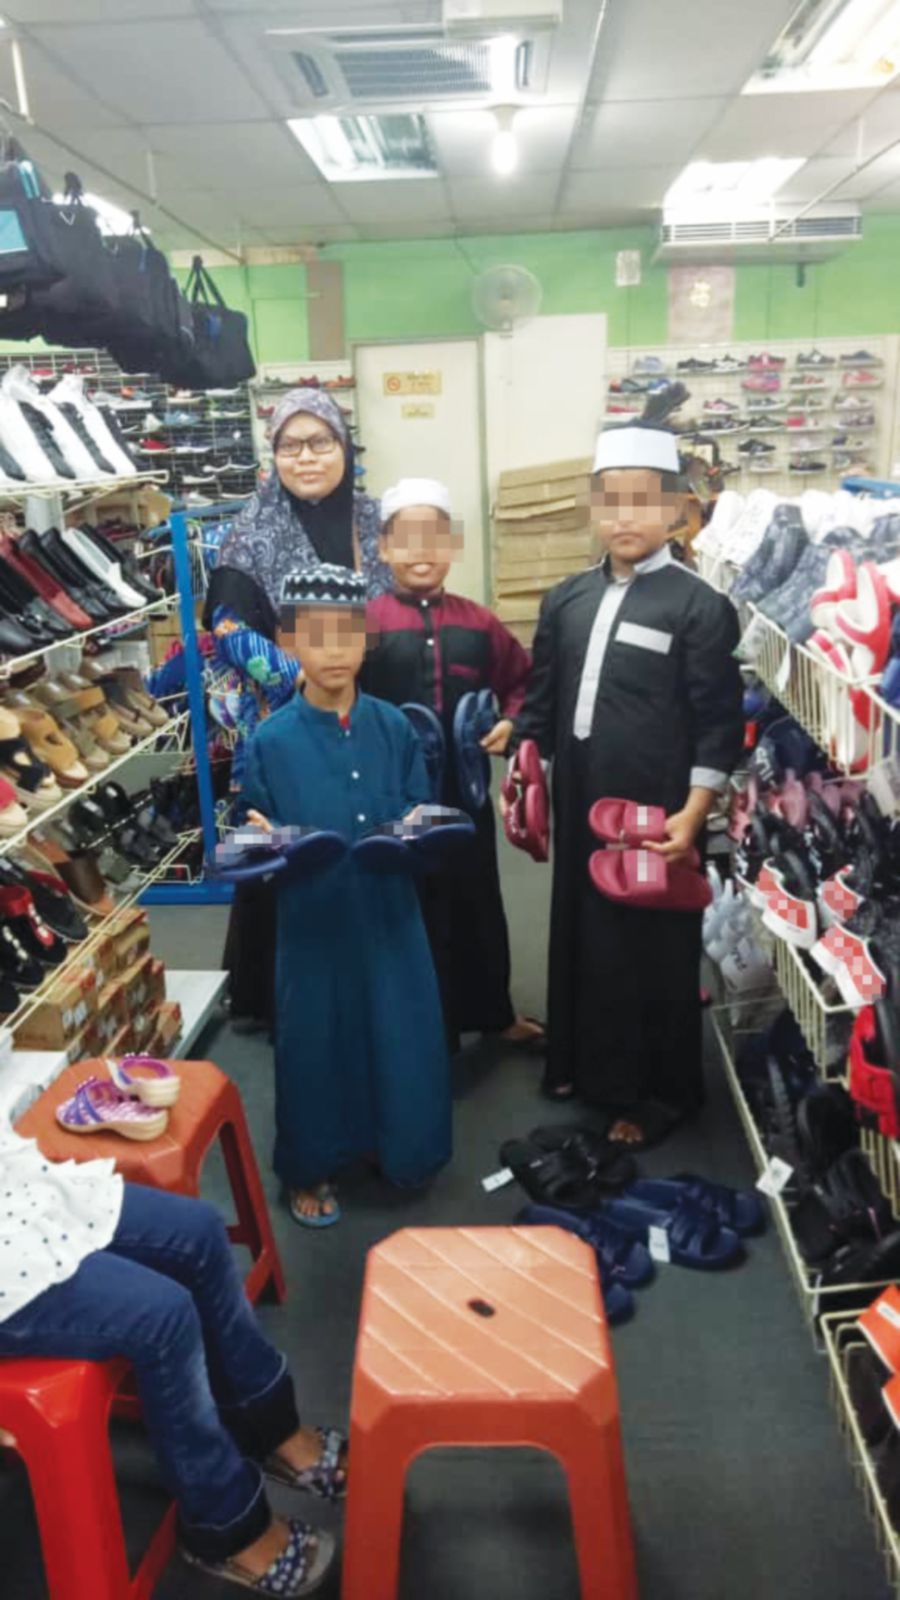 Kak Zalina and some of the refugee children buying slippers.